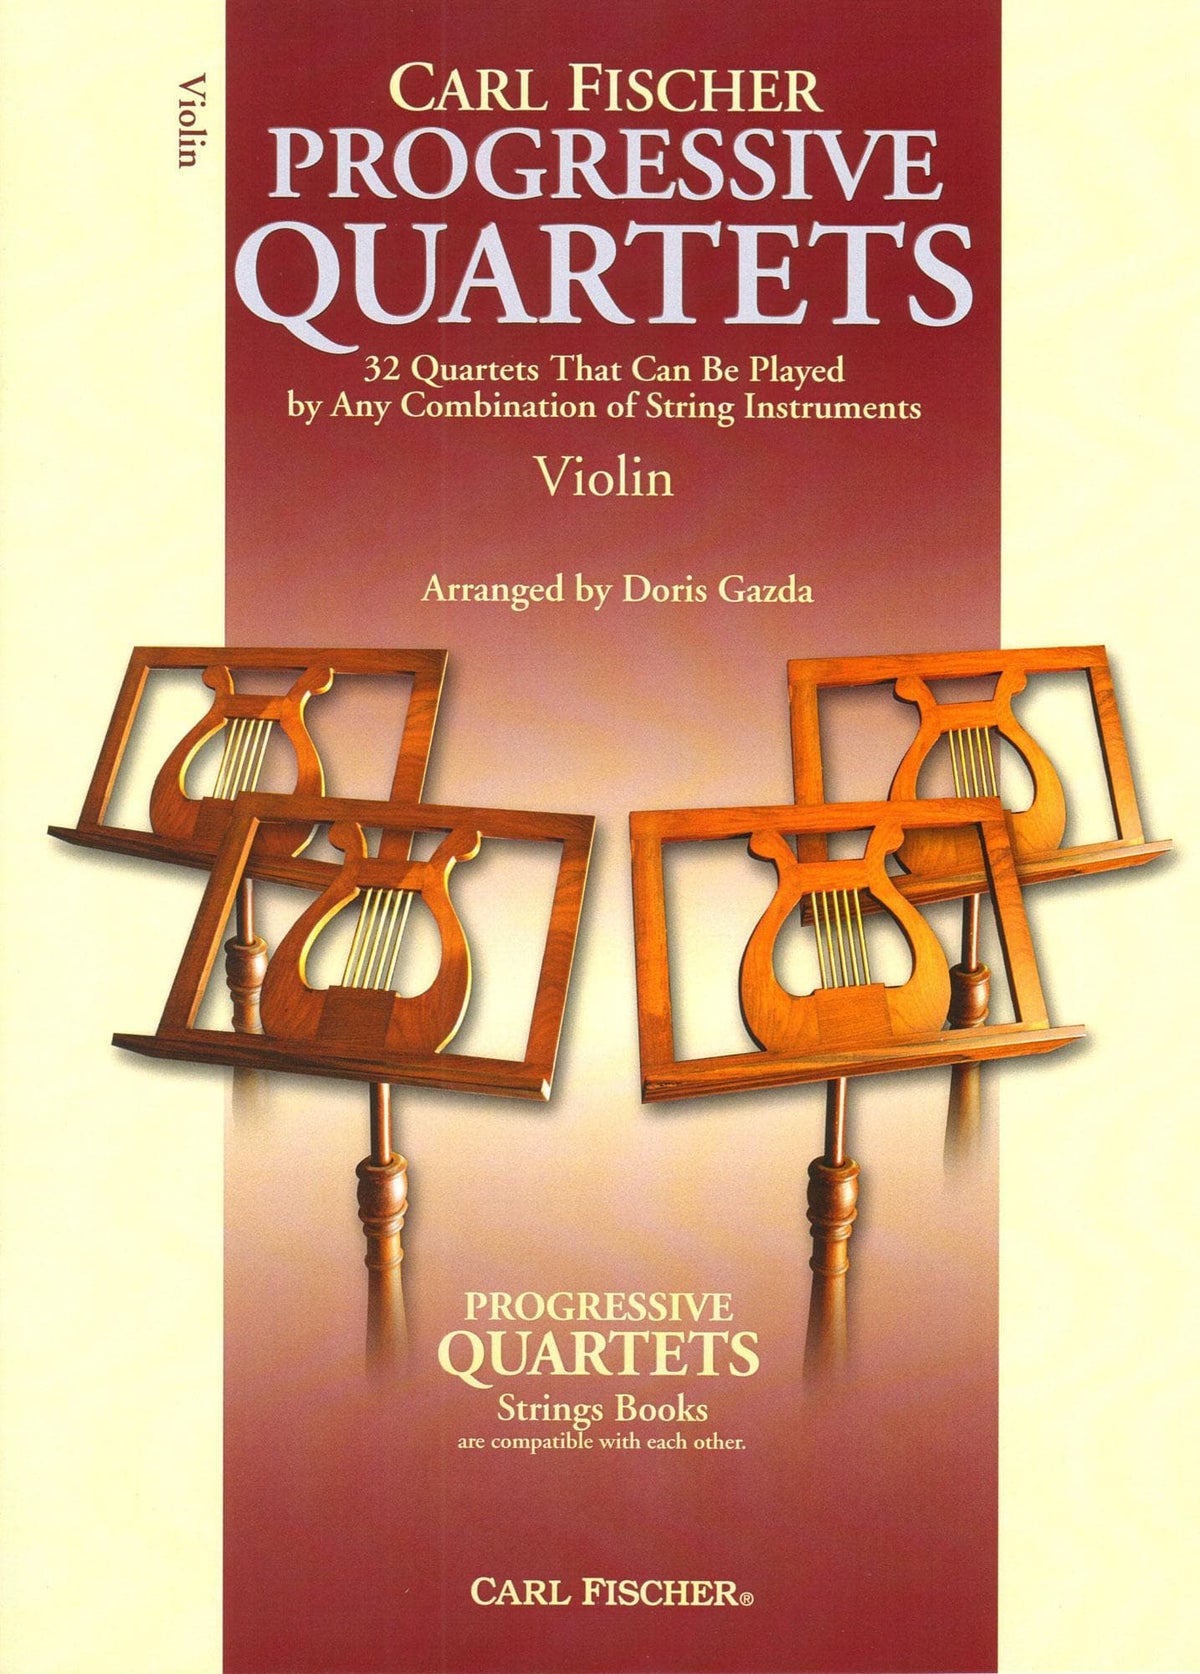 Progressive Quartets for Violin - 32 Quartets for Any Combination of Stringed Instruments - Arranged by Doris Gazda - Carl Fischer Publication